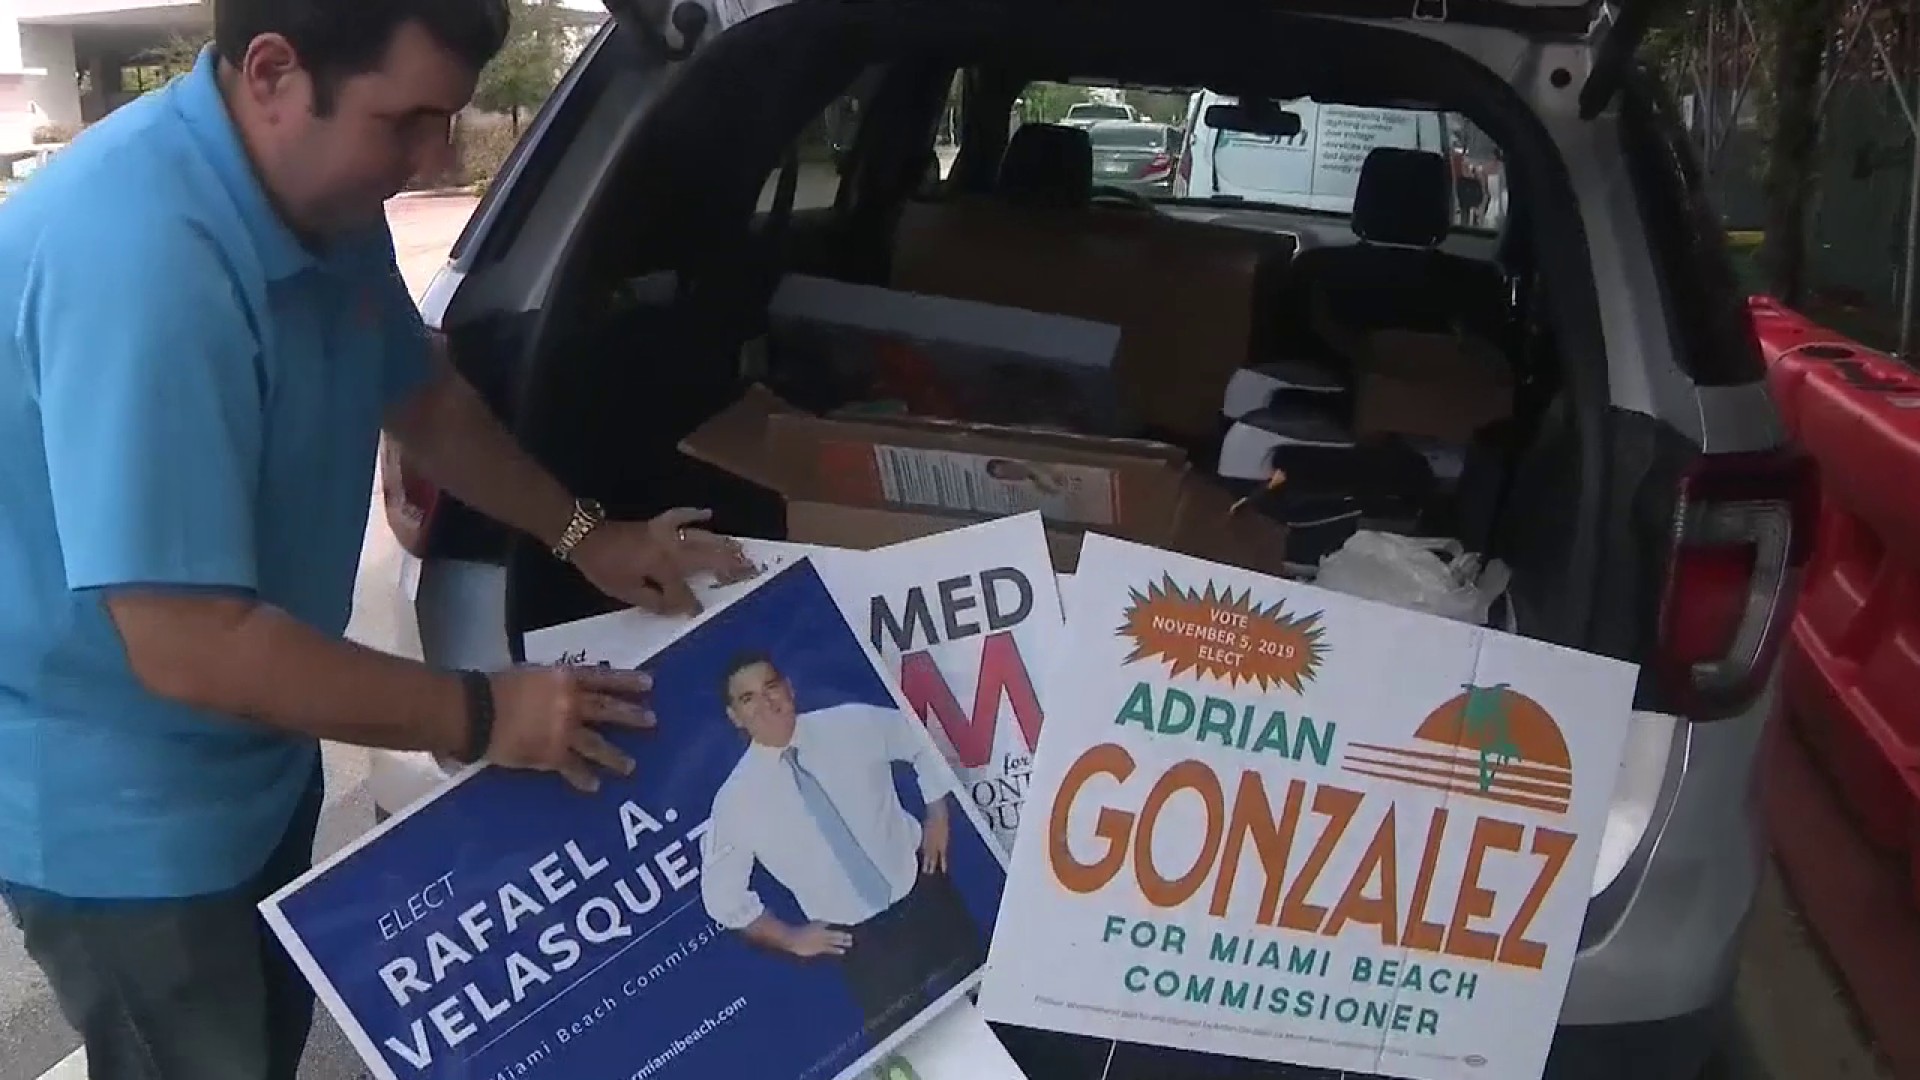 Adrian Gonzalez for Miami Beach City Commissioner